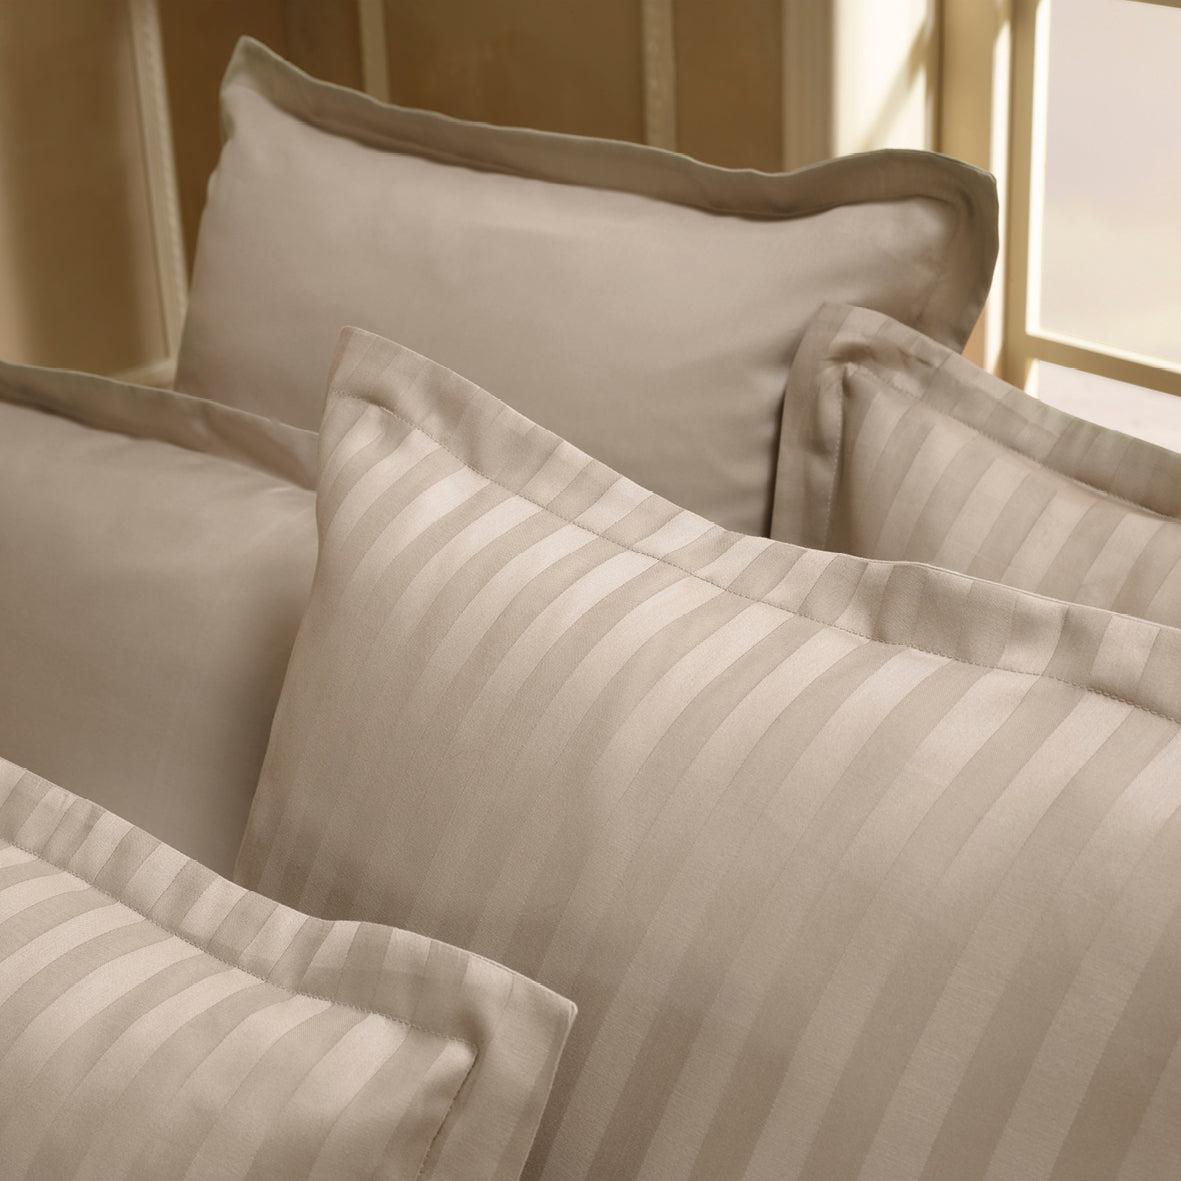 Duvet cover + pillowcase(s) cotton satin - Jacquard woven stripe - Taupe